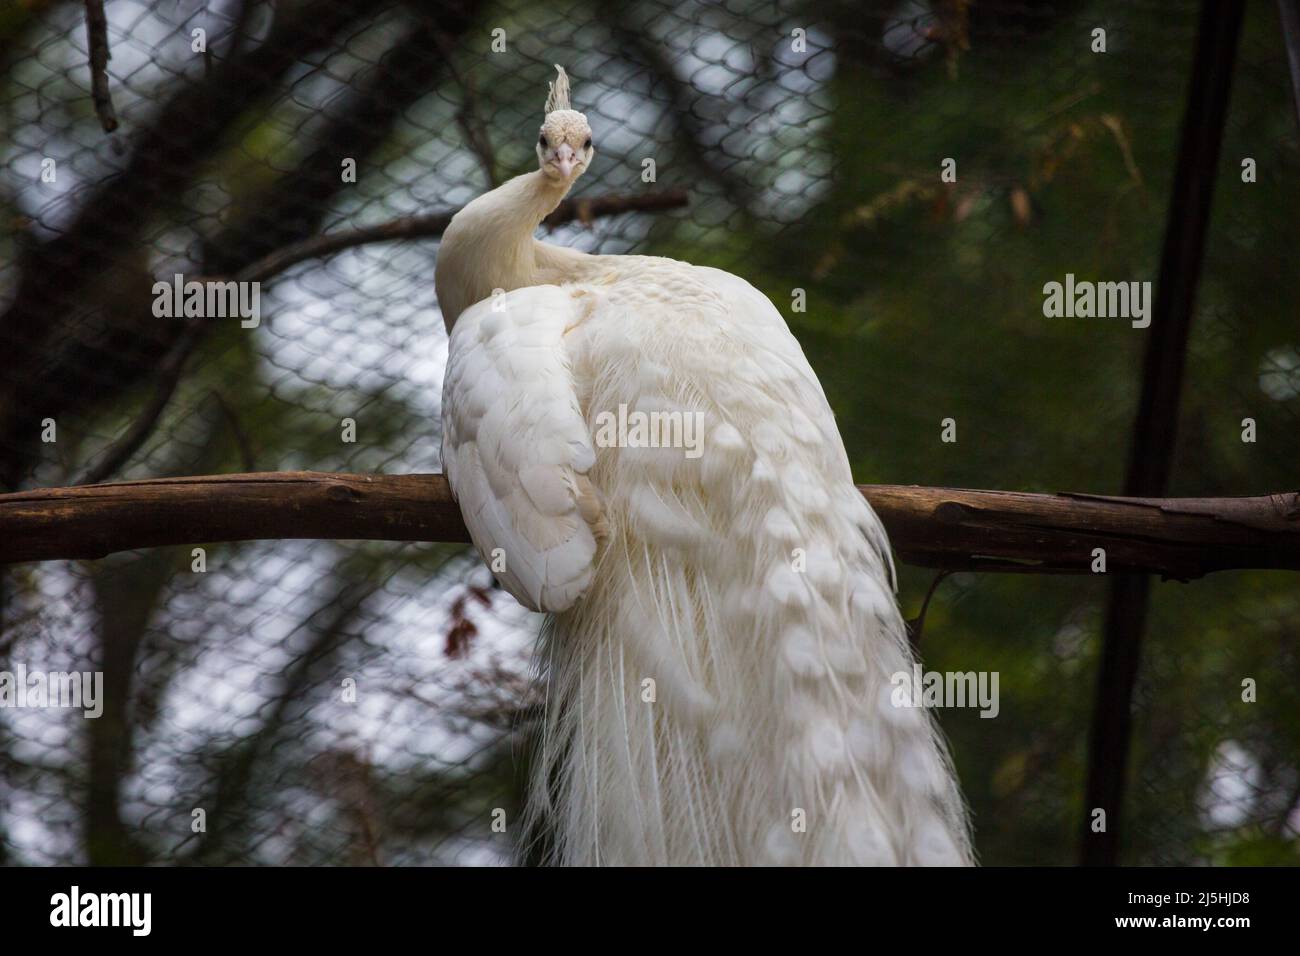 A leucistic Indian peacock (White Peacock). Albino White Peafowl Stock Photo